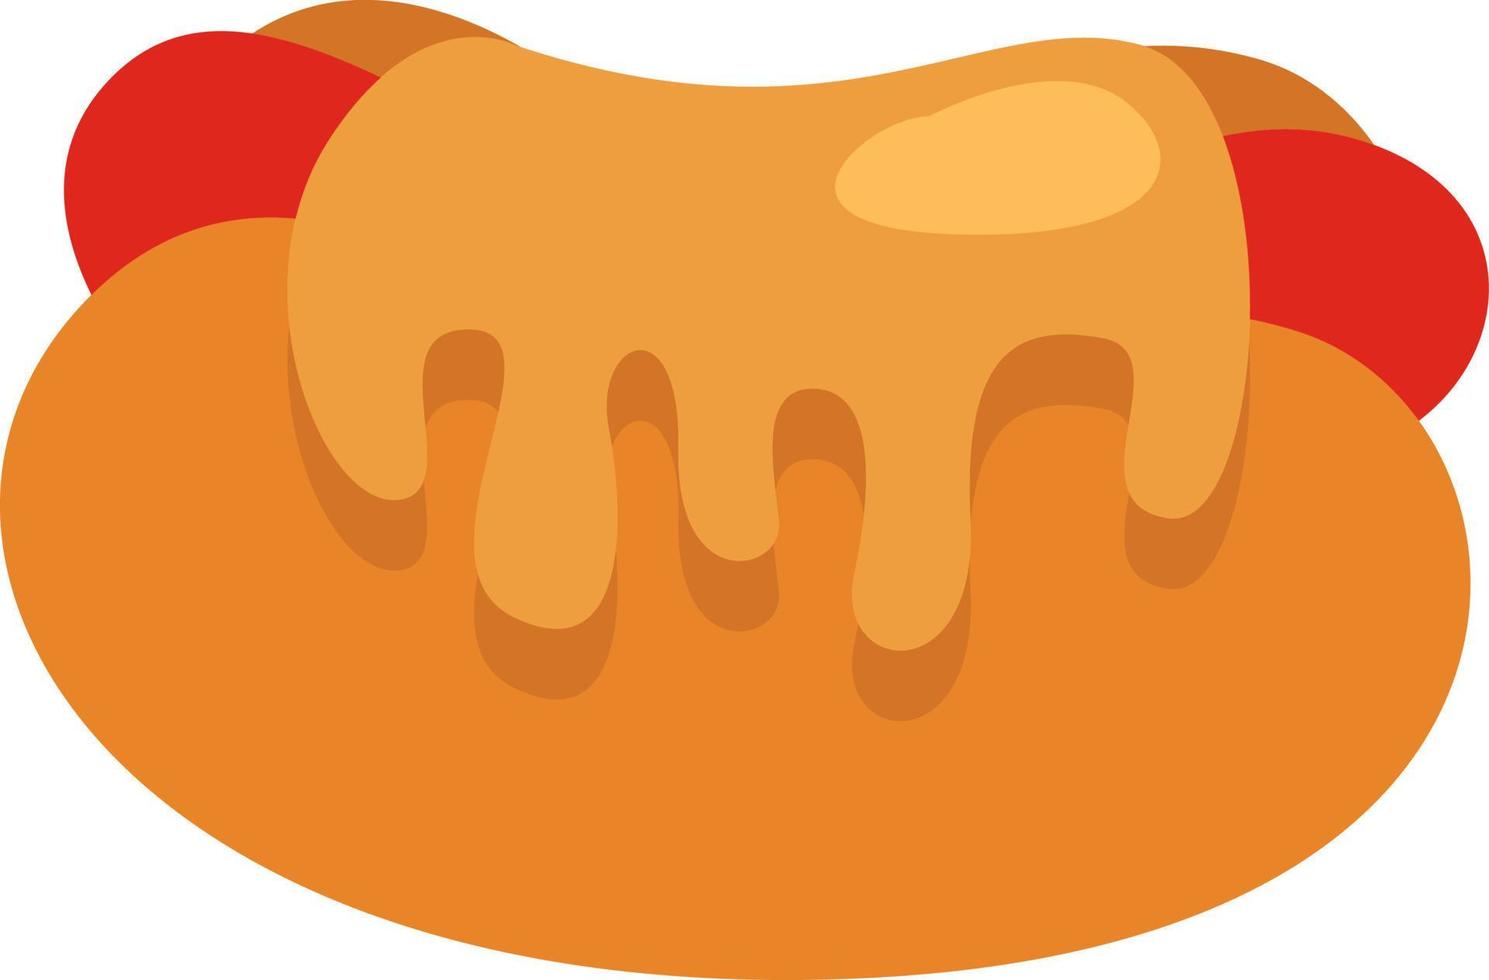 Gastronomy hot dog, illustration, vector on a white background.